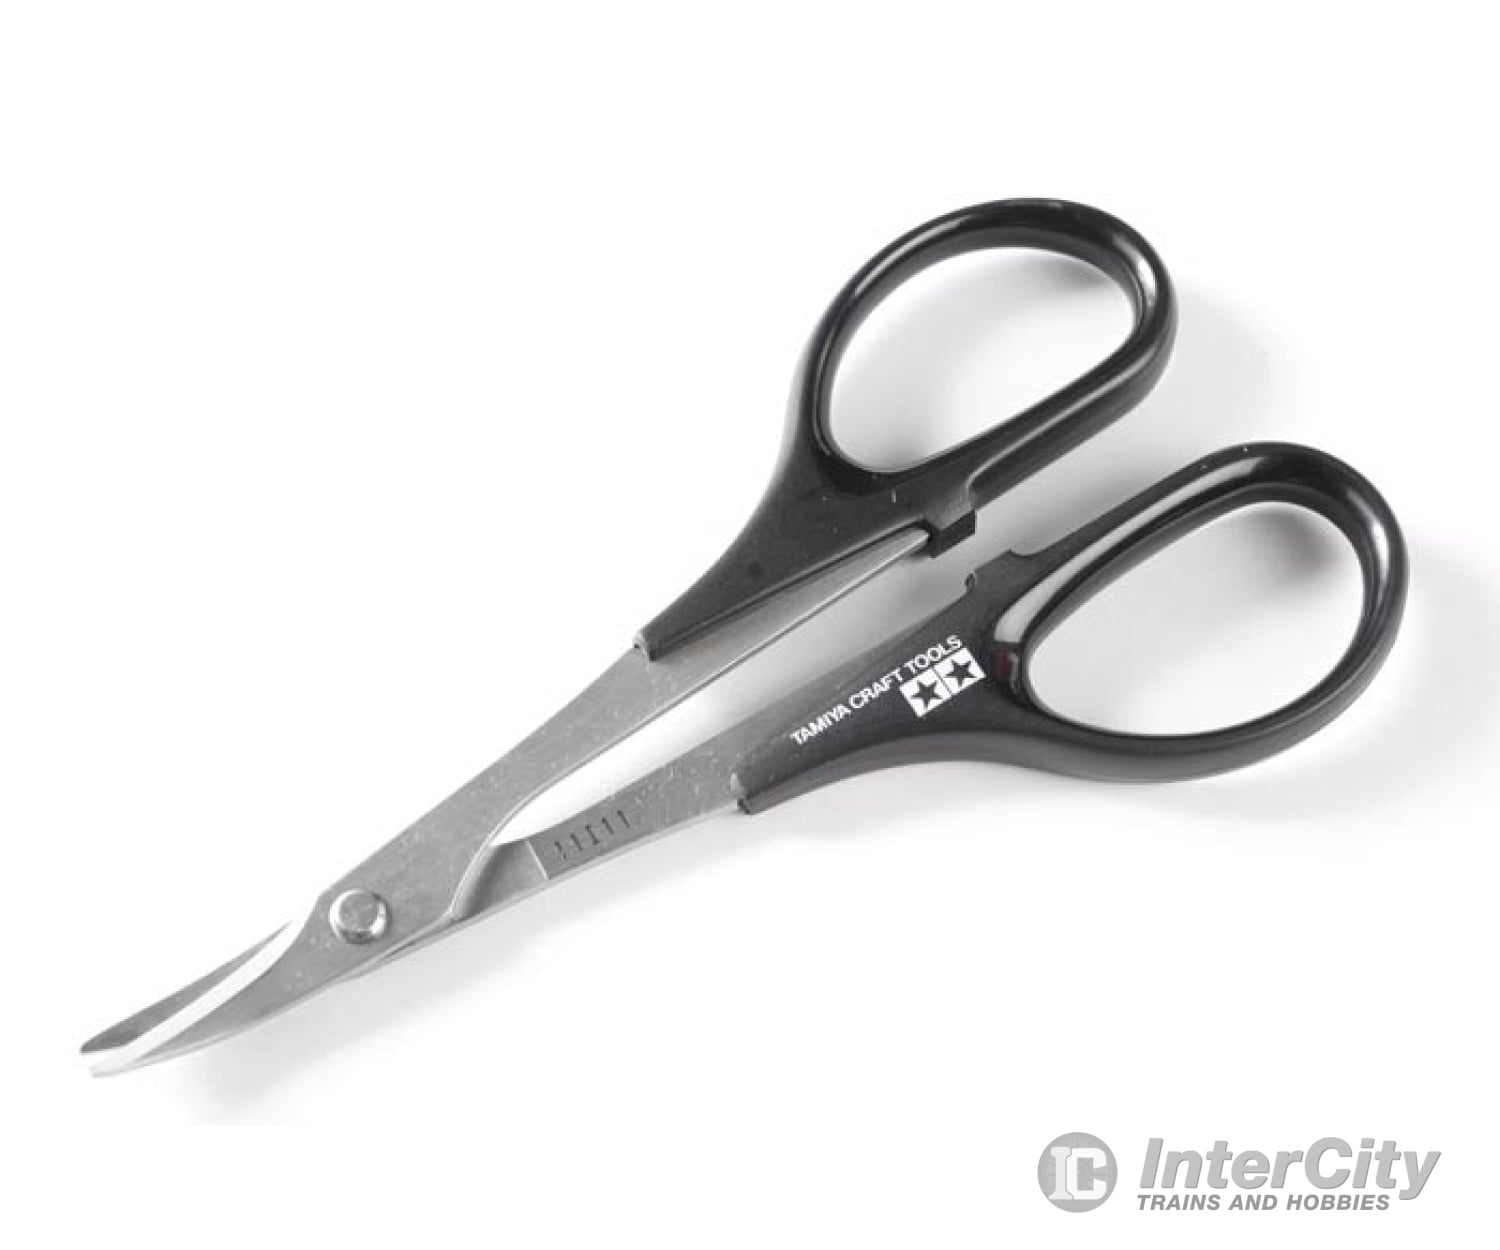 Tamiya 74005 Curved Scissors For Plastics Tools